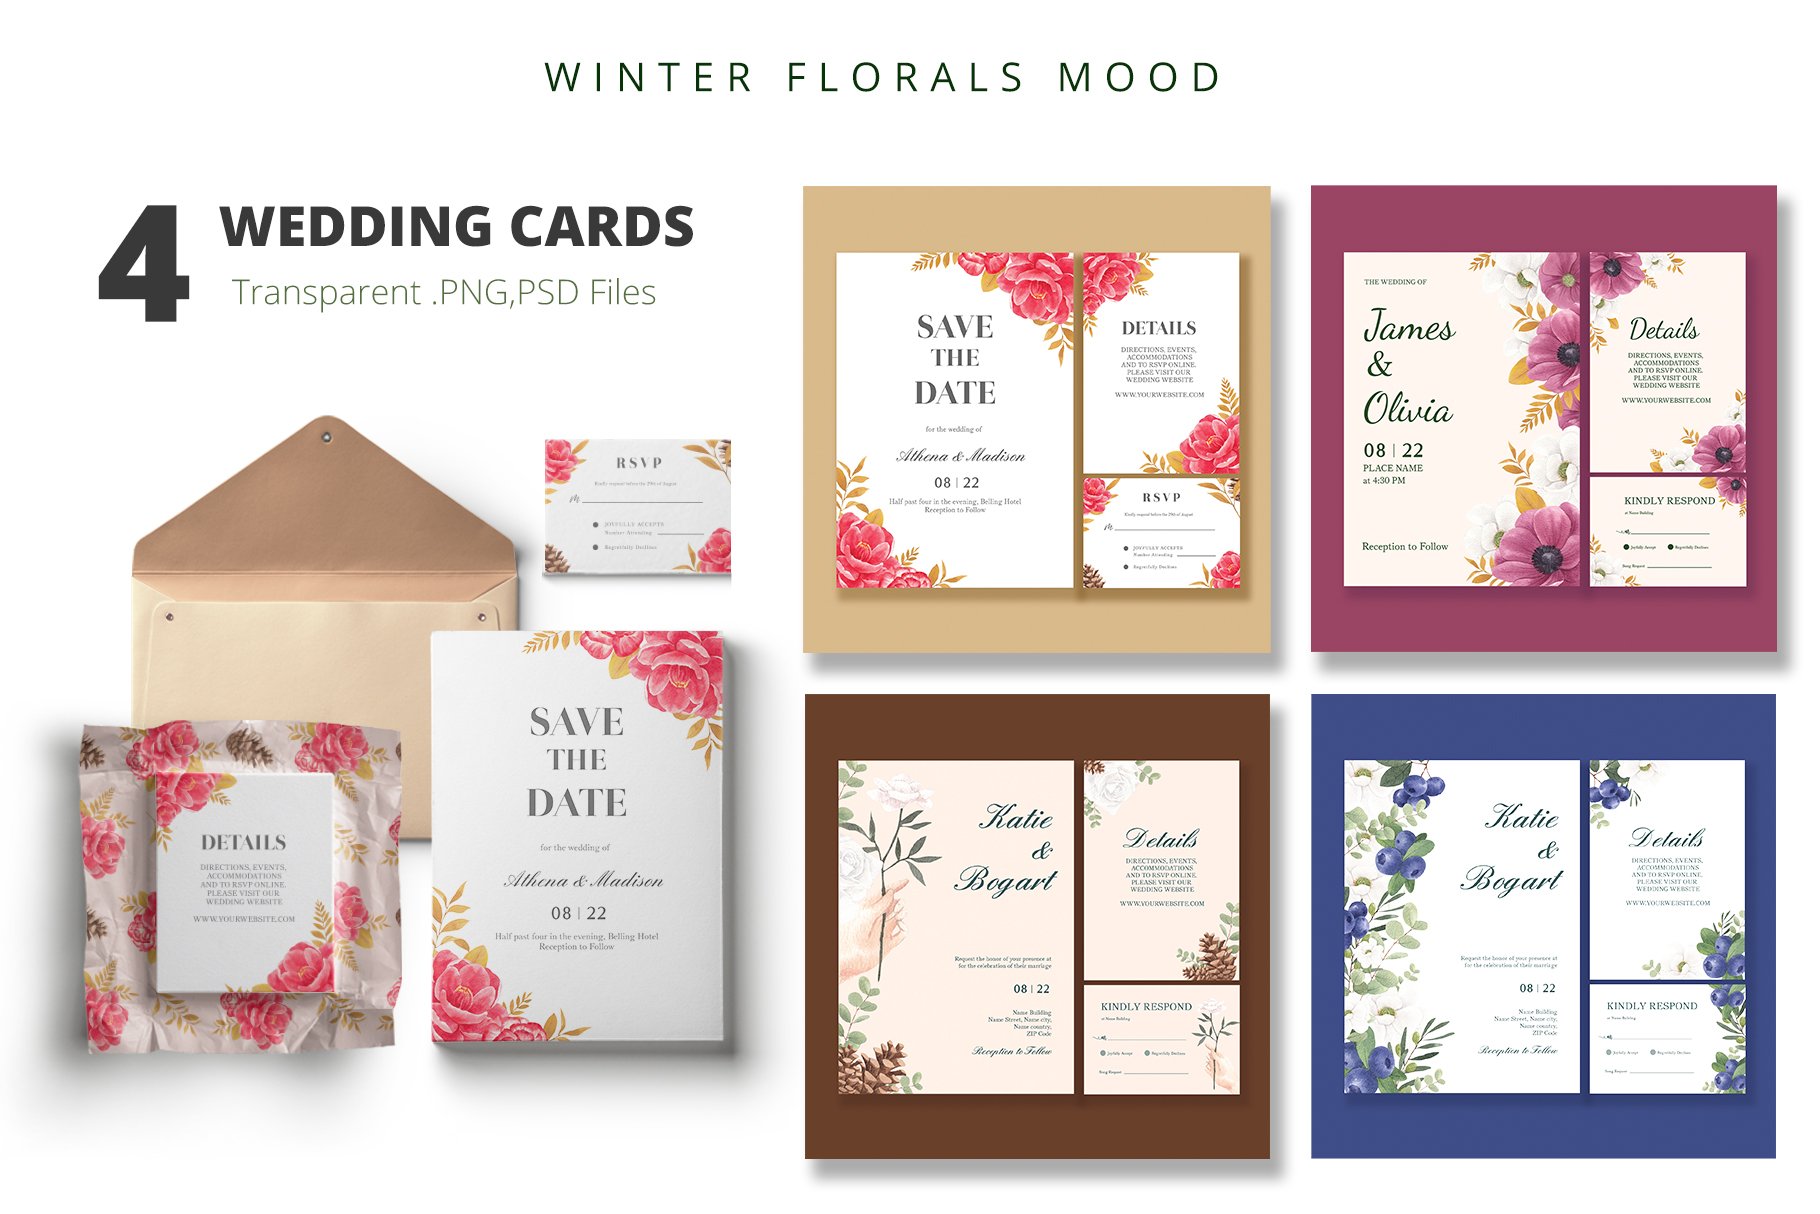 Winter florals mood wedding cards.